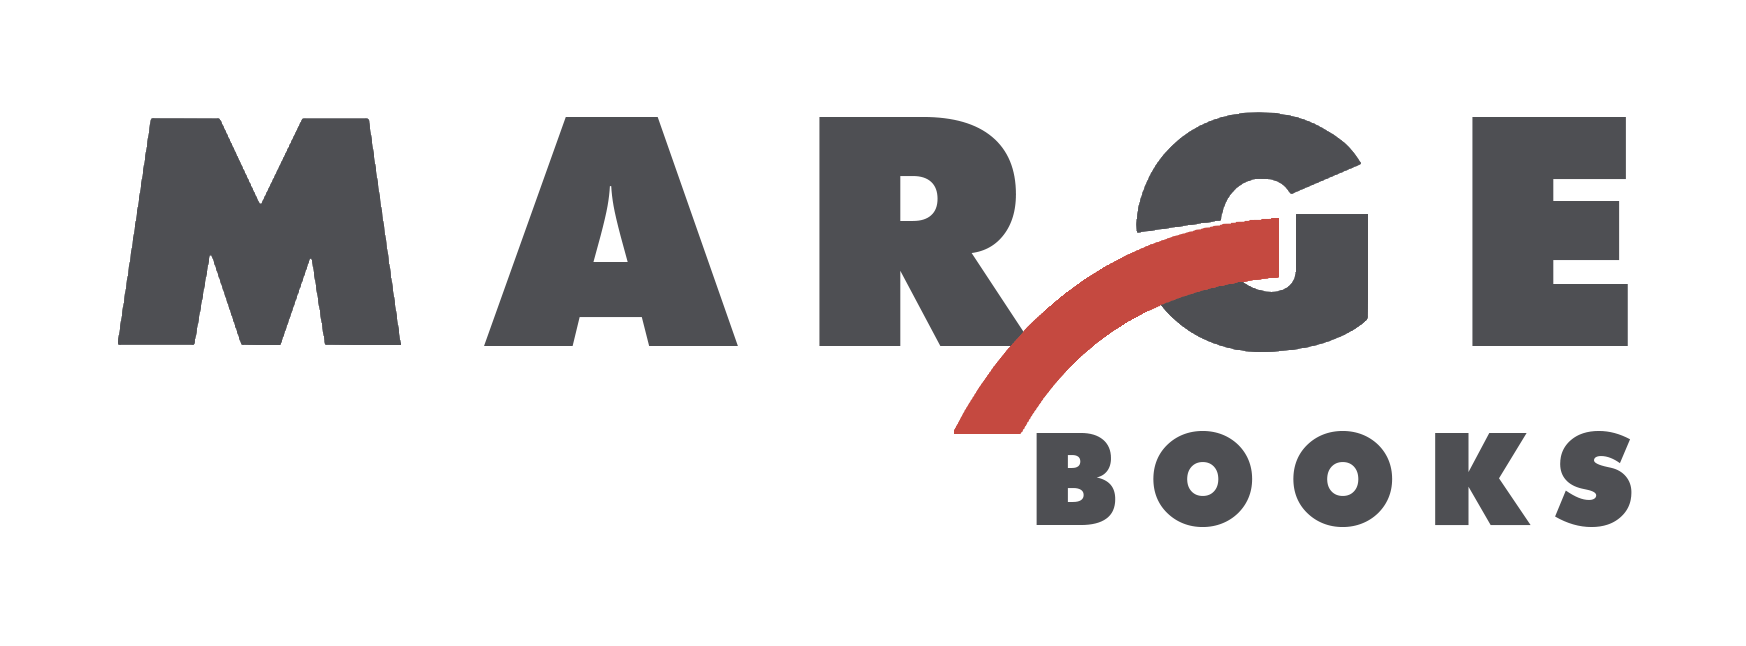 margebooks_logo-1